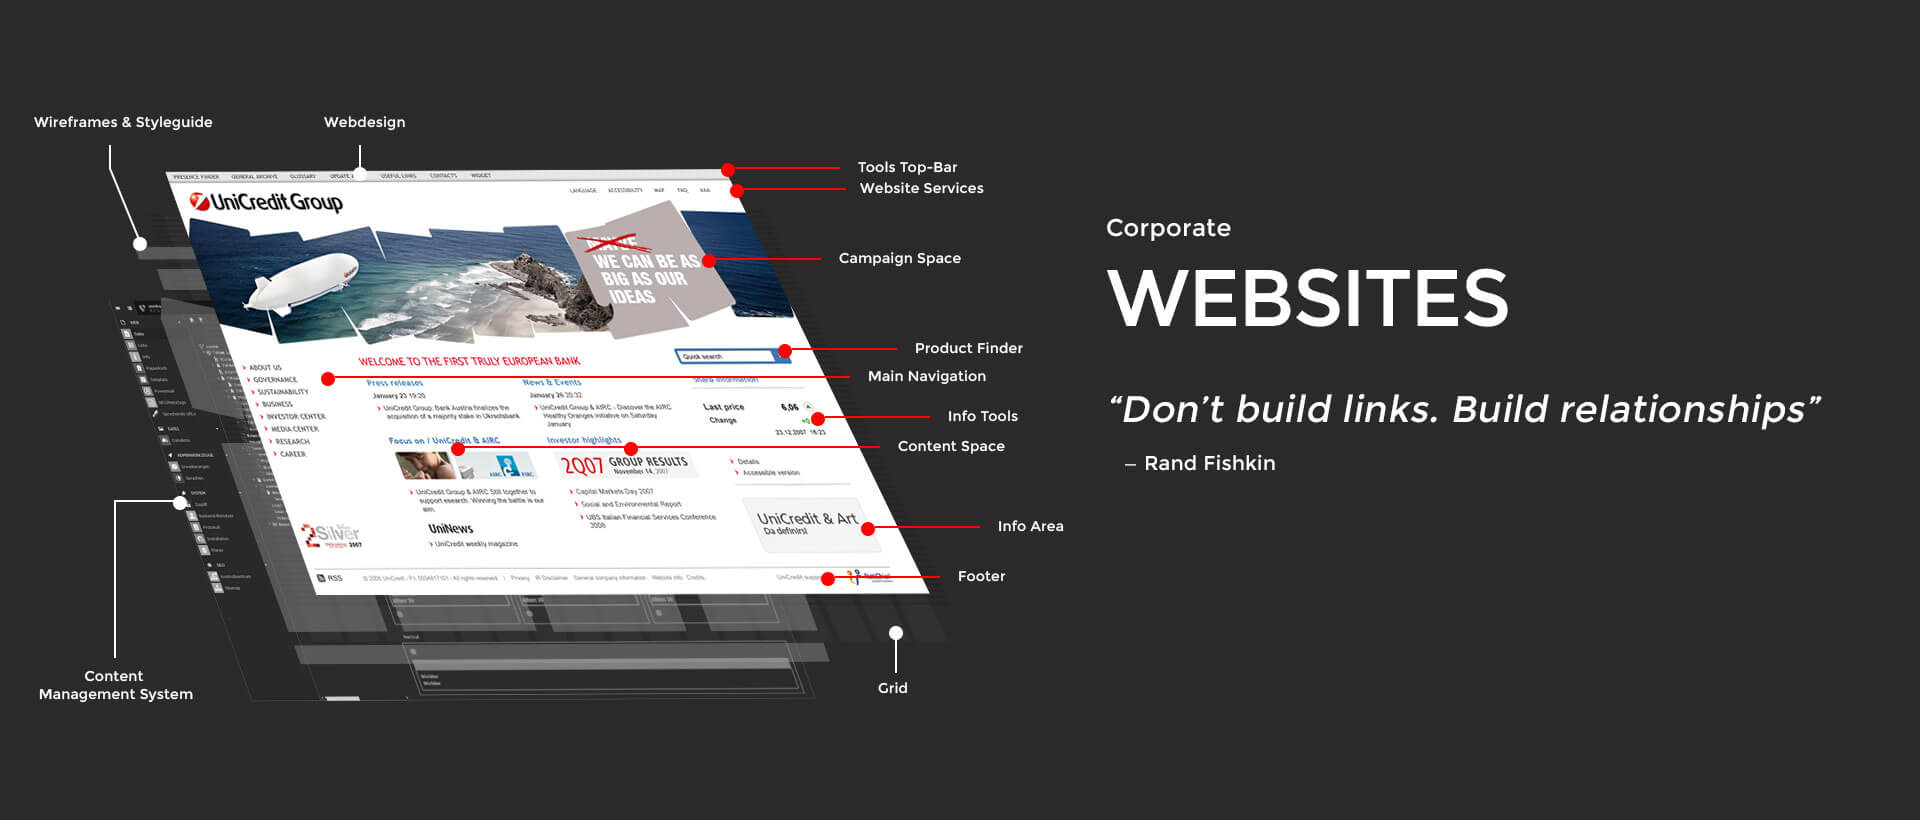 Corporate Websites